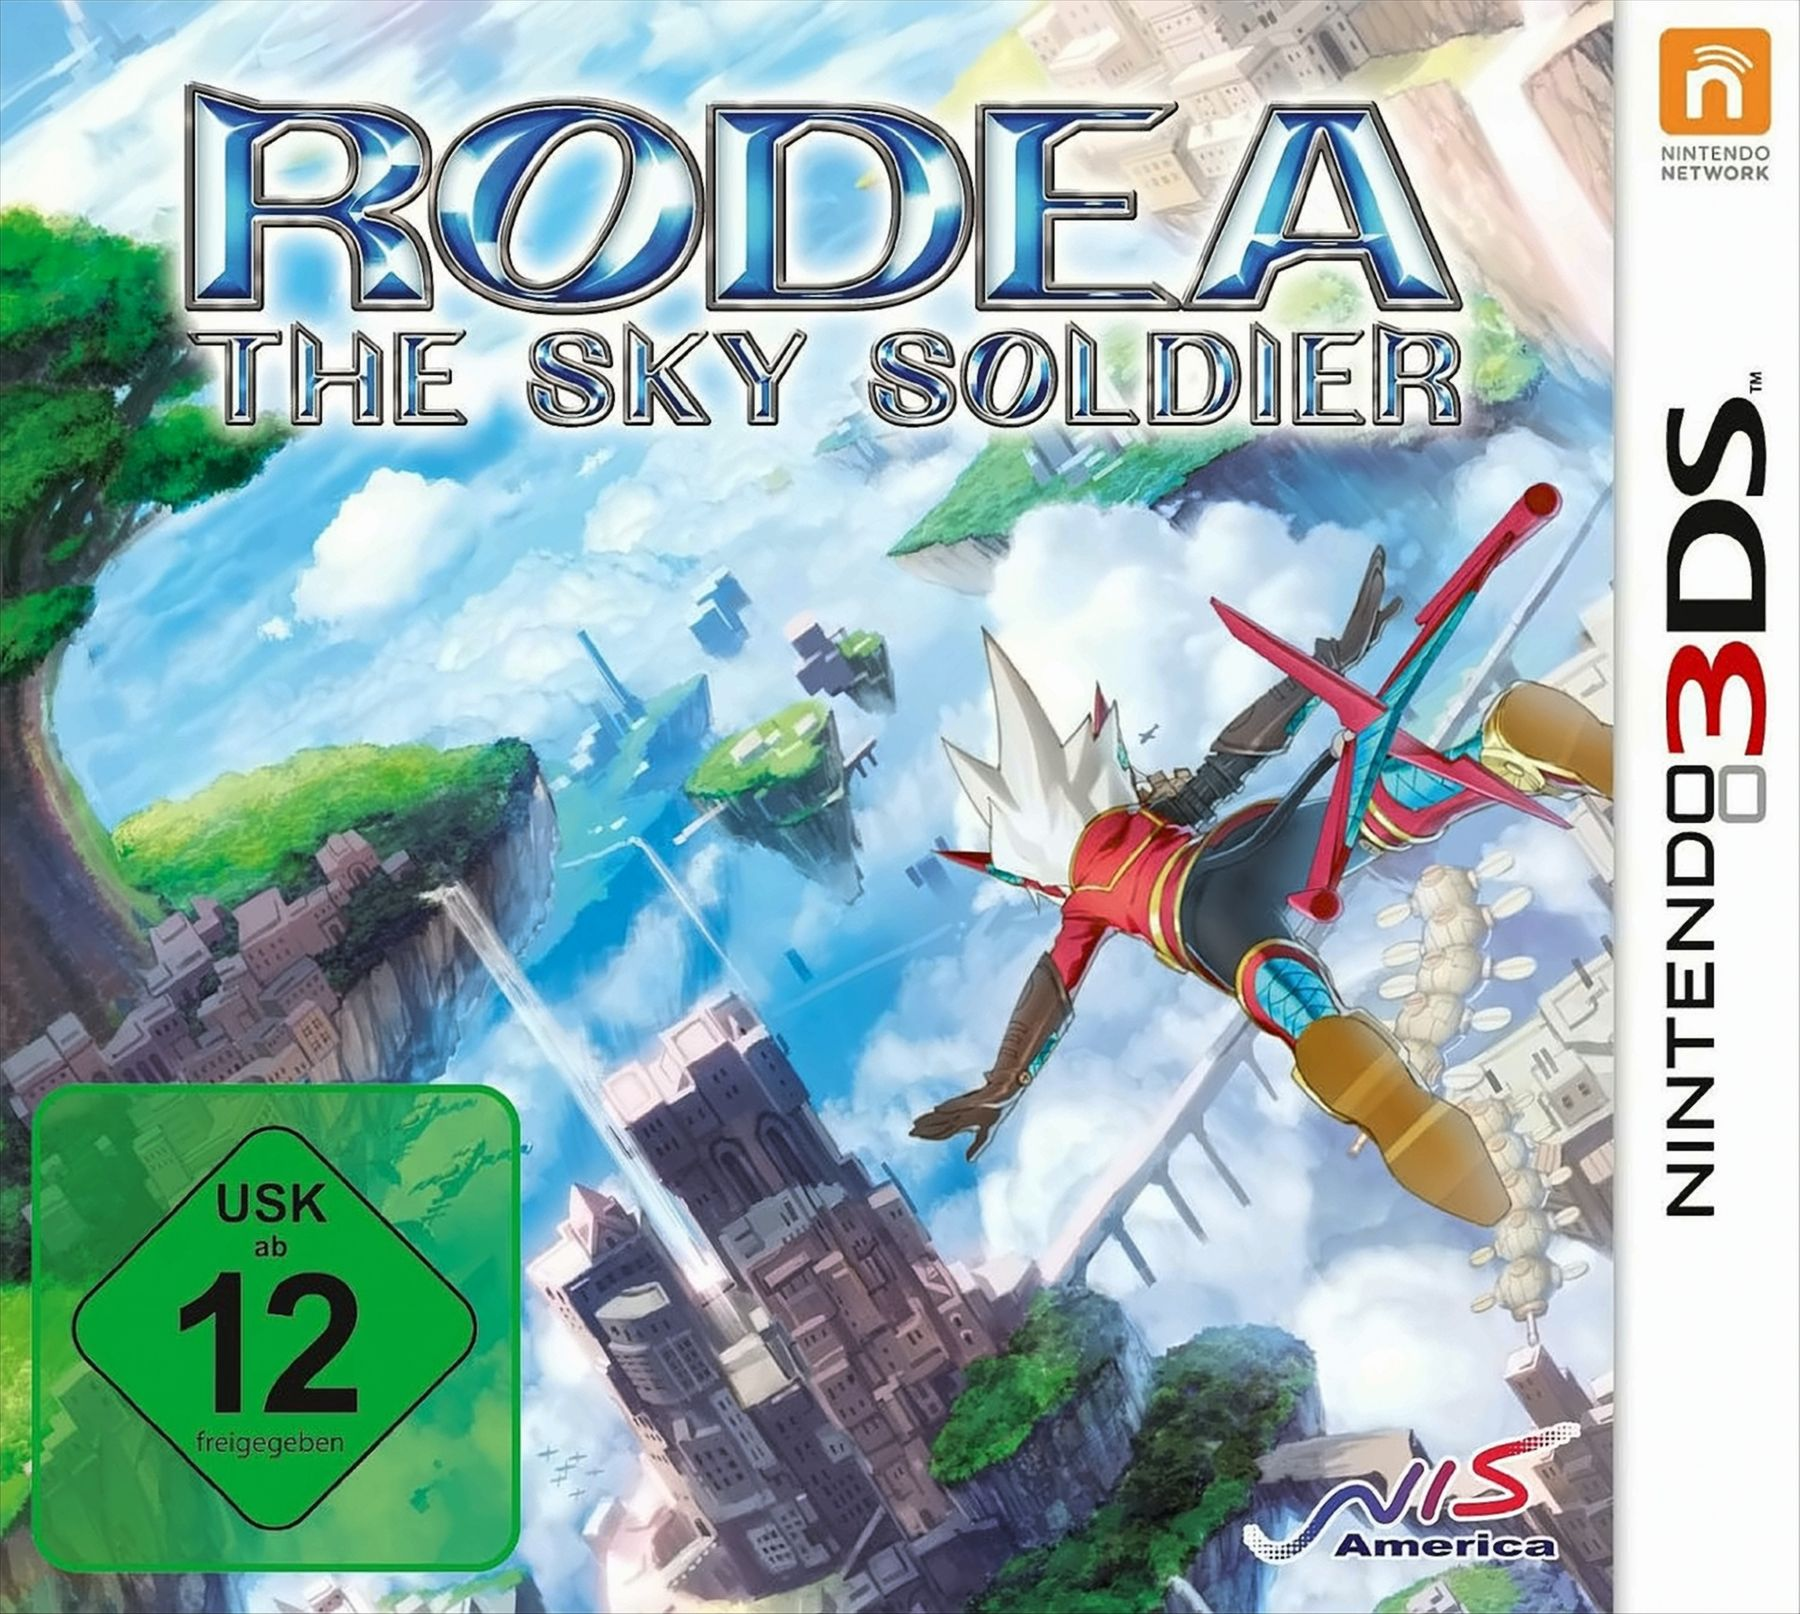 Rodea 3DS] Sky [Nintendo Soldier The -